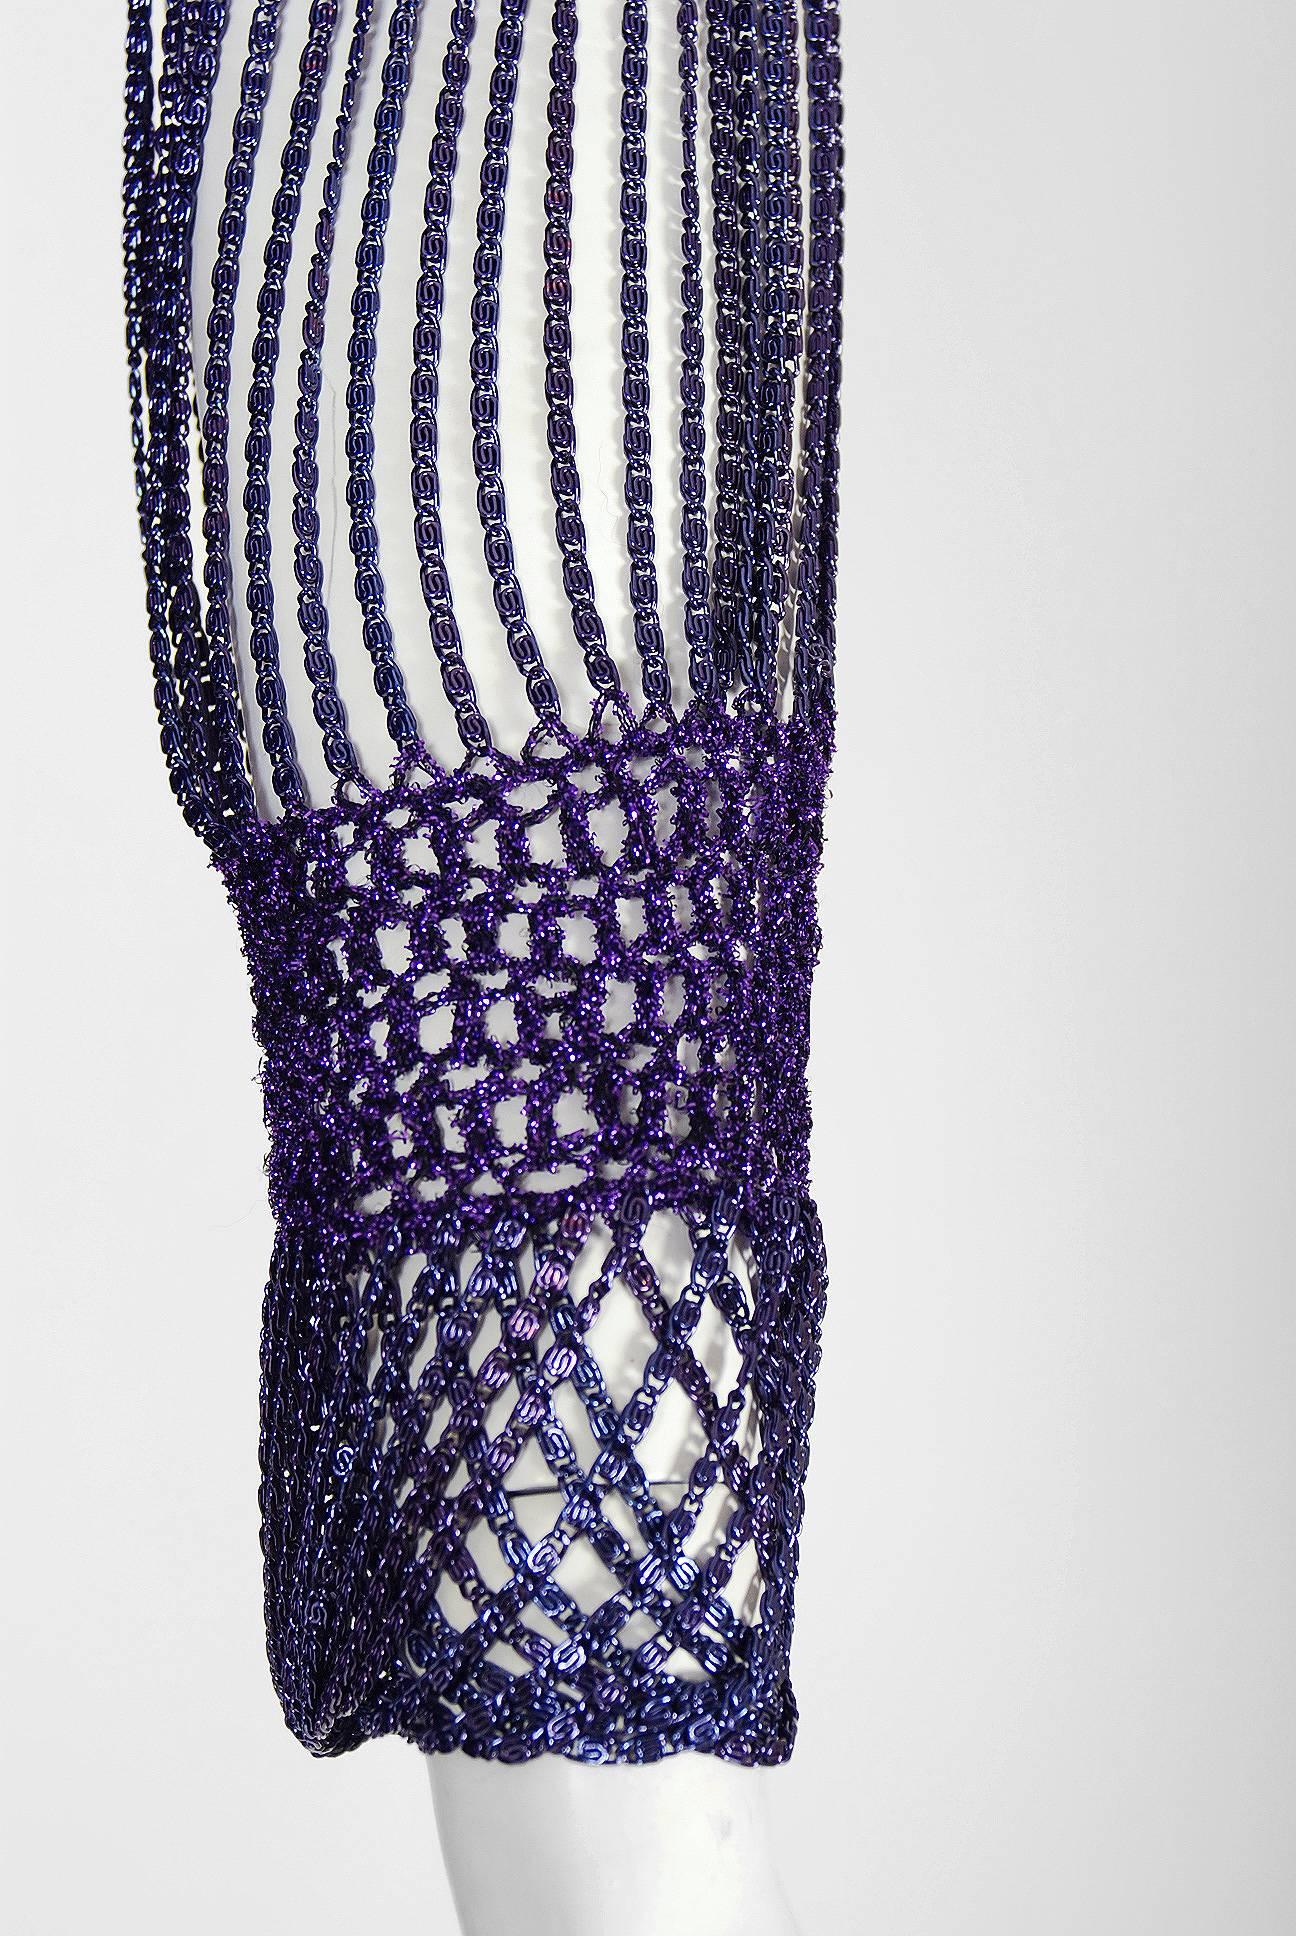 1977 Loris Azzaro Couture Purple Lurex & Chain-Fringe Evening Gown Ensemble  1